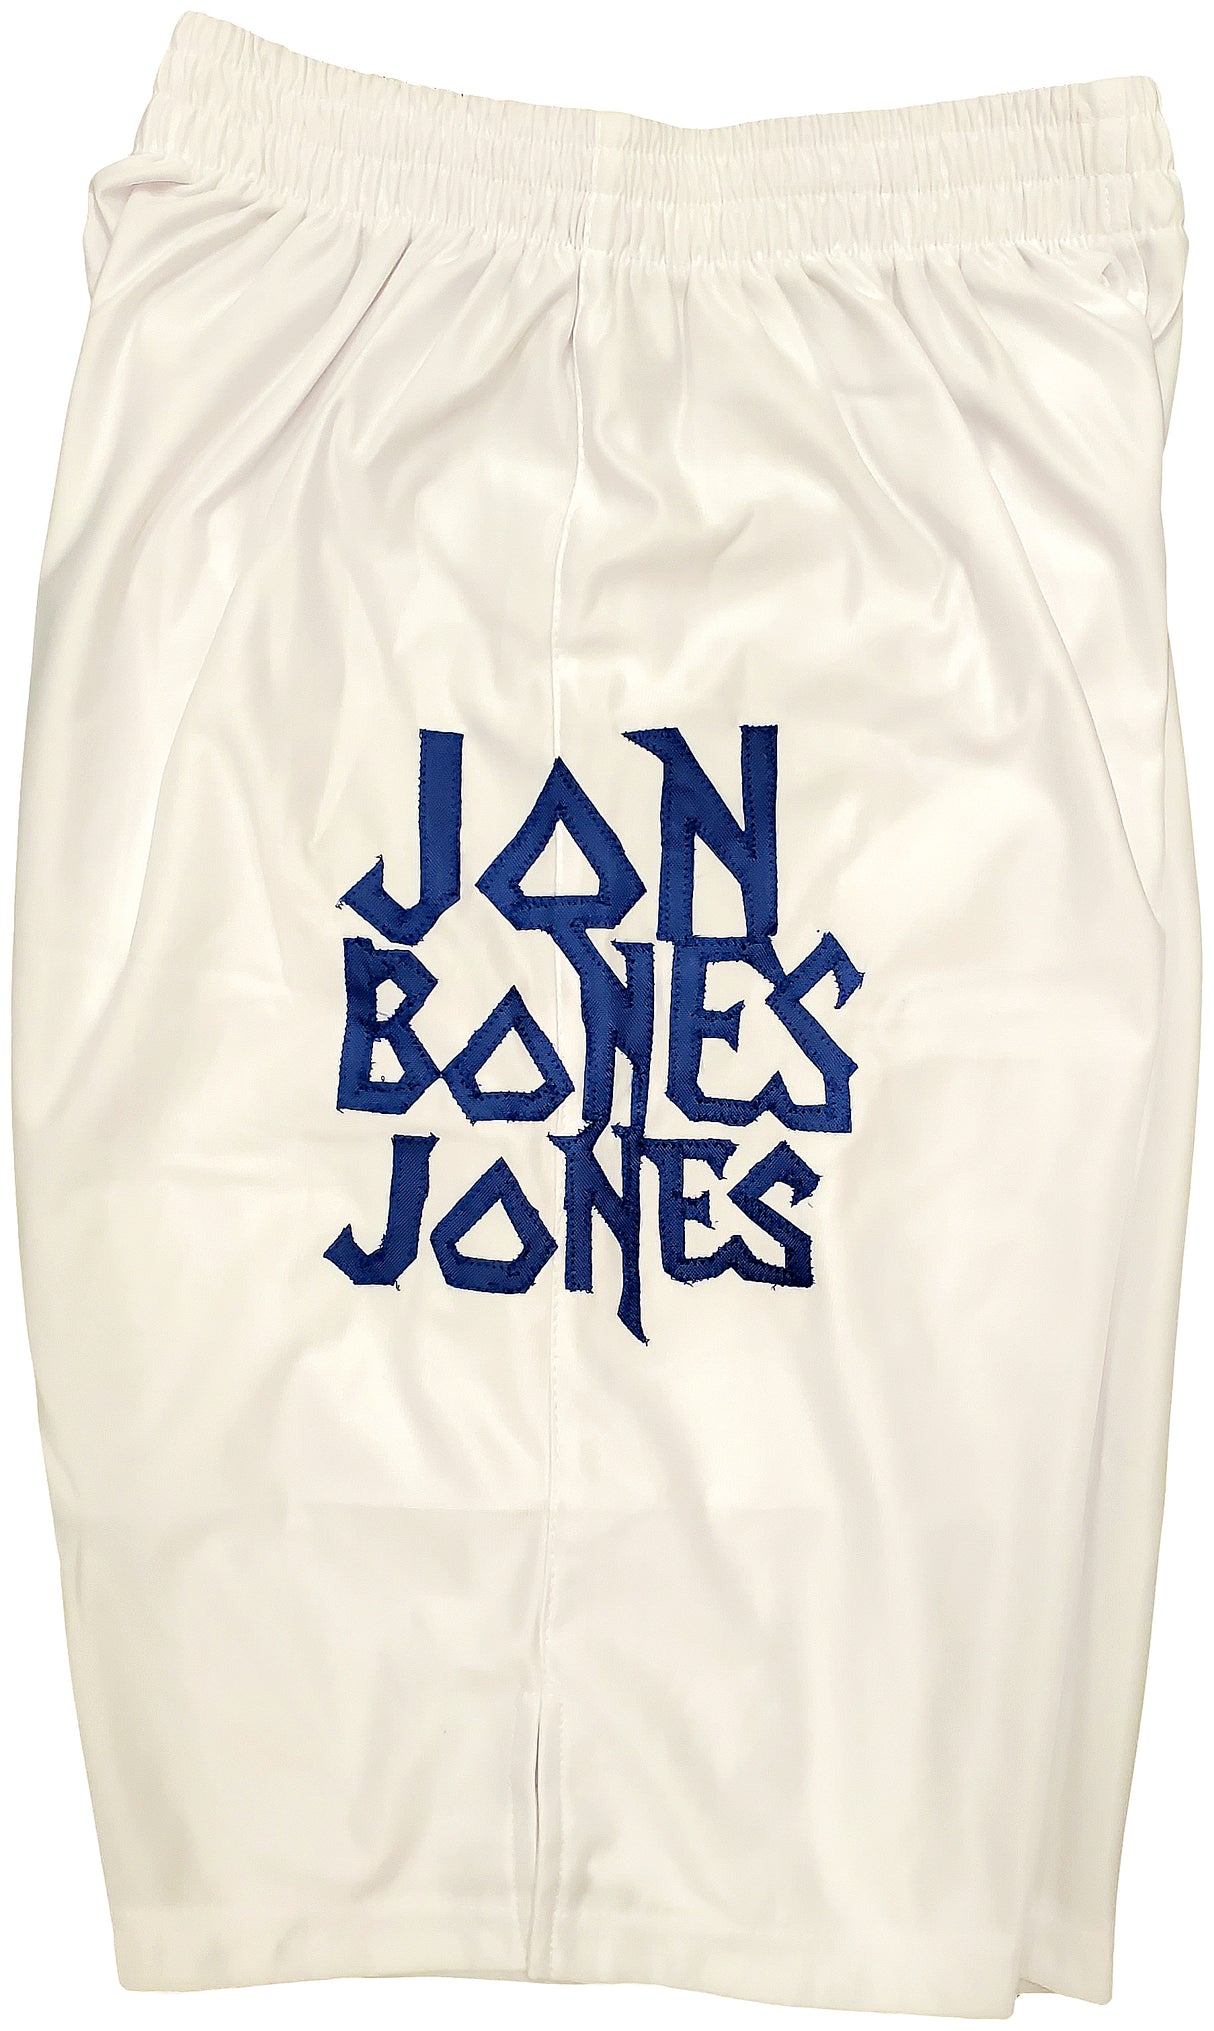 Jon Bones Jones Autographed White Boxing Trunks Beckett BAS QR Stock #200323